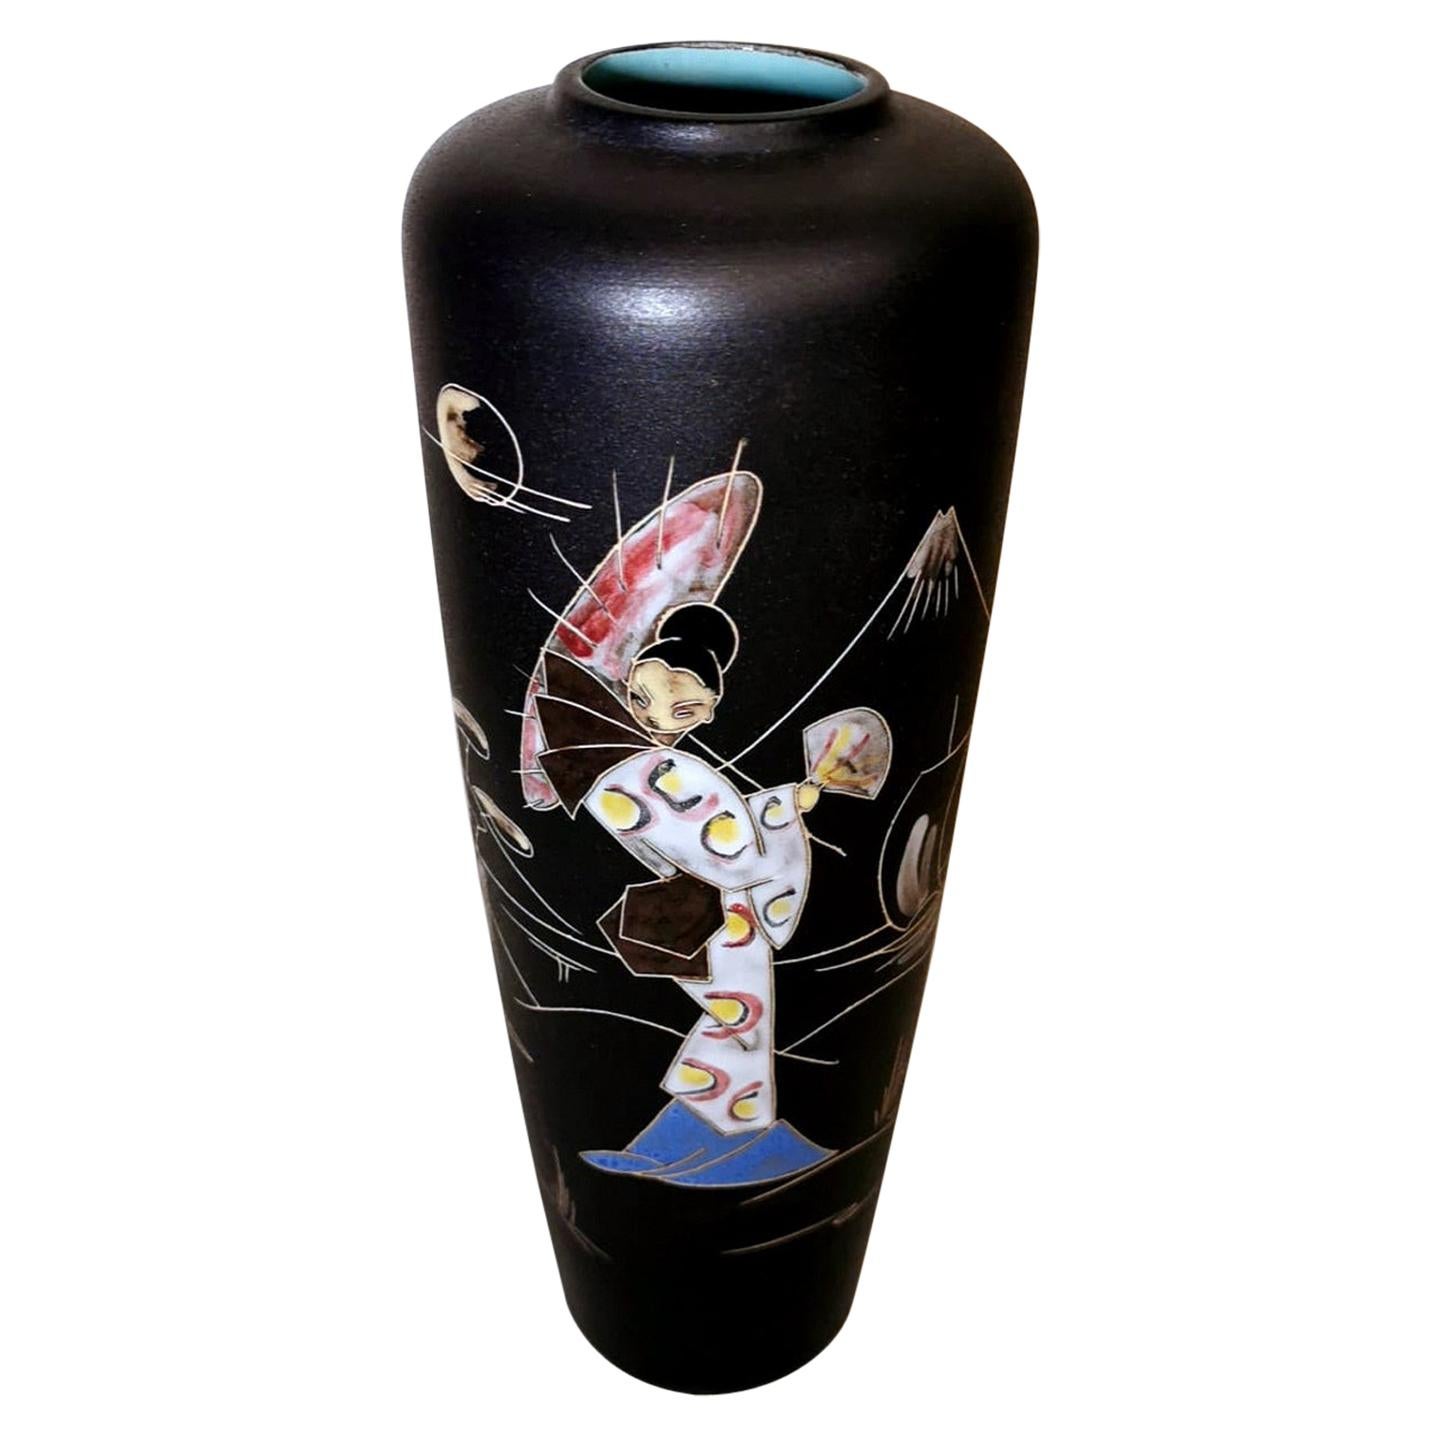 Ruscha Keramik Germany Vintage Ceramic Vase With Japanese Decoration For Sale